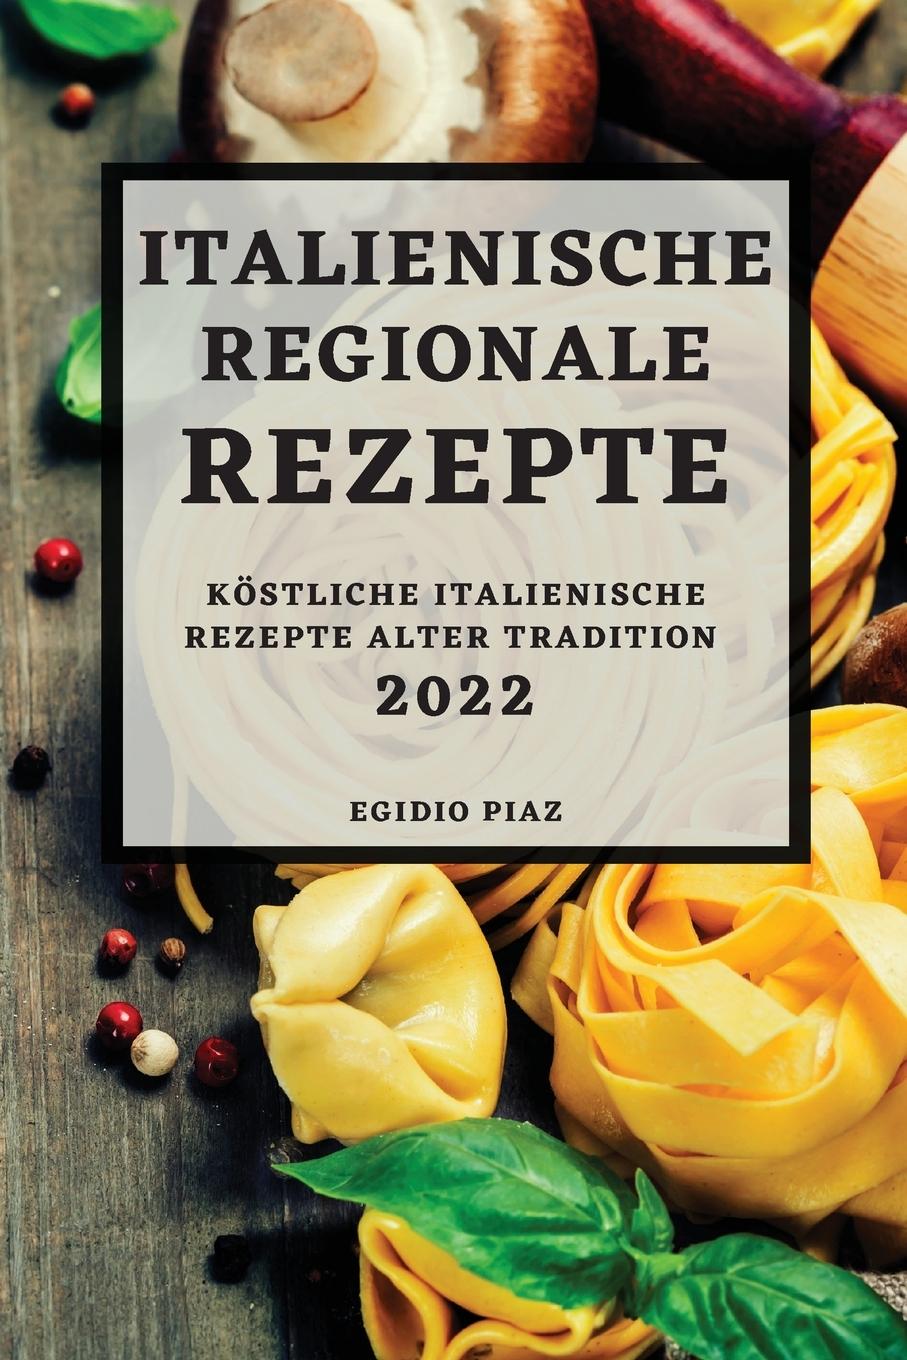 Kniha Italienische Regionale Rezepte 2022 